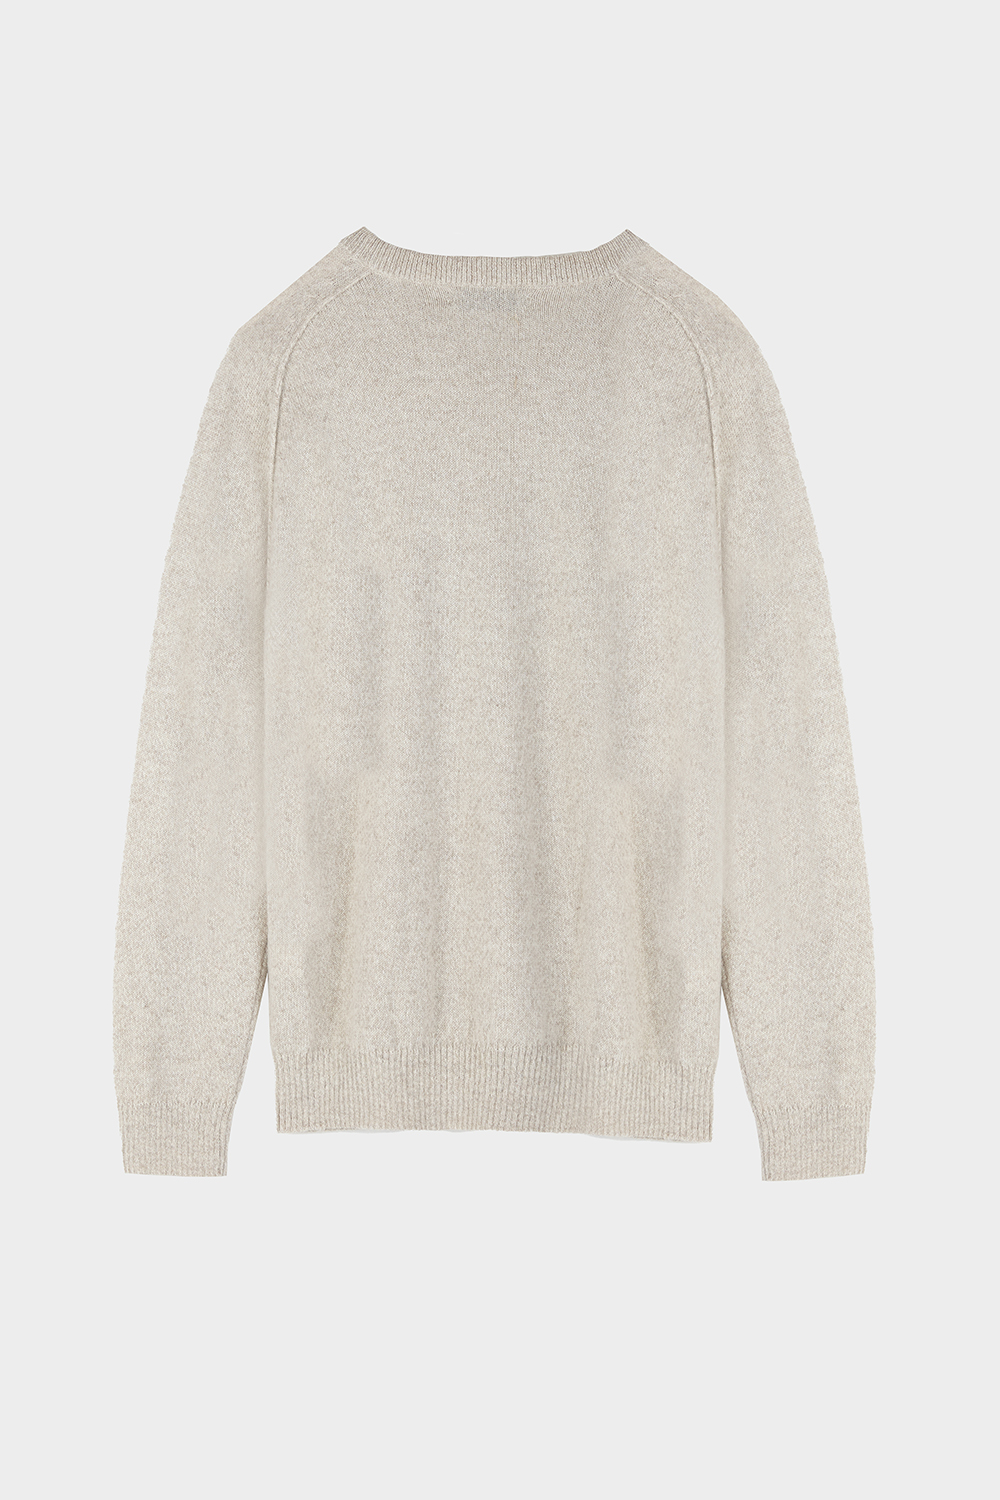 sweater ceibo crudo 2_1000x1500_72